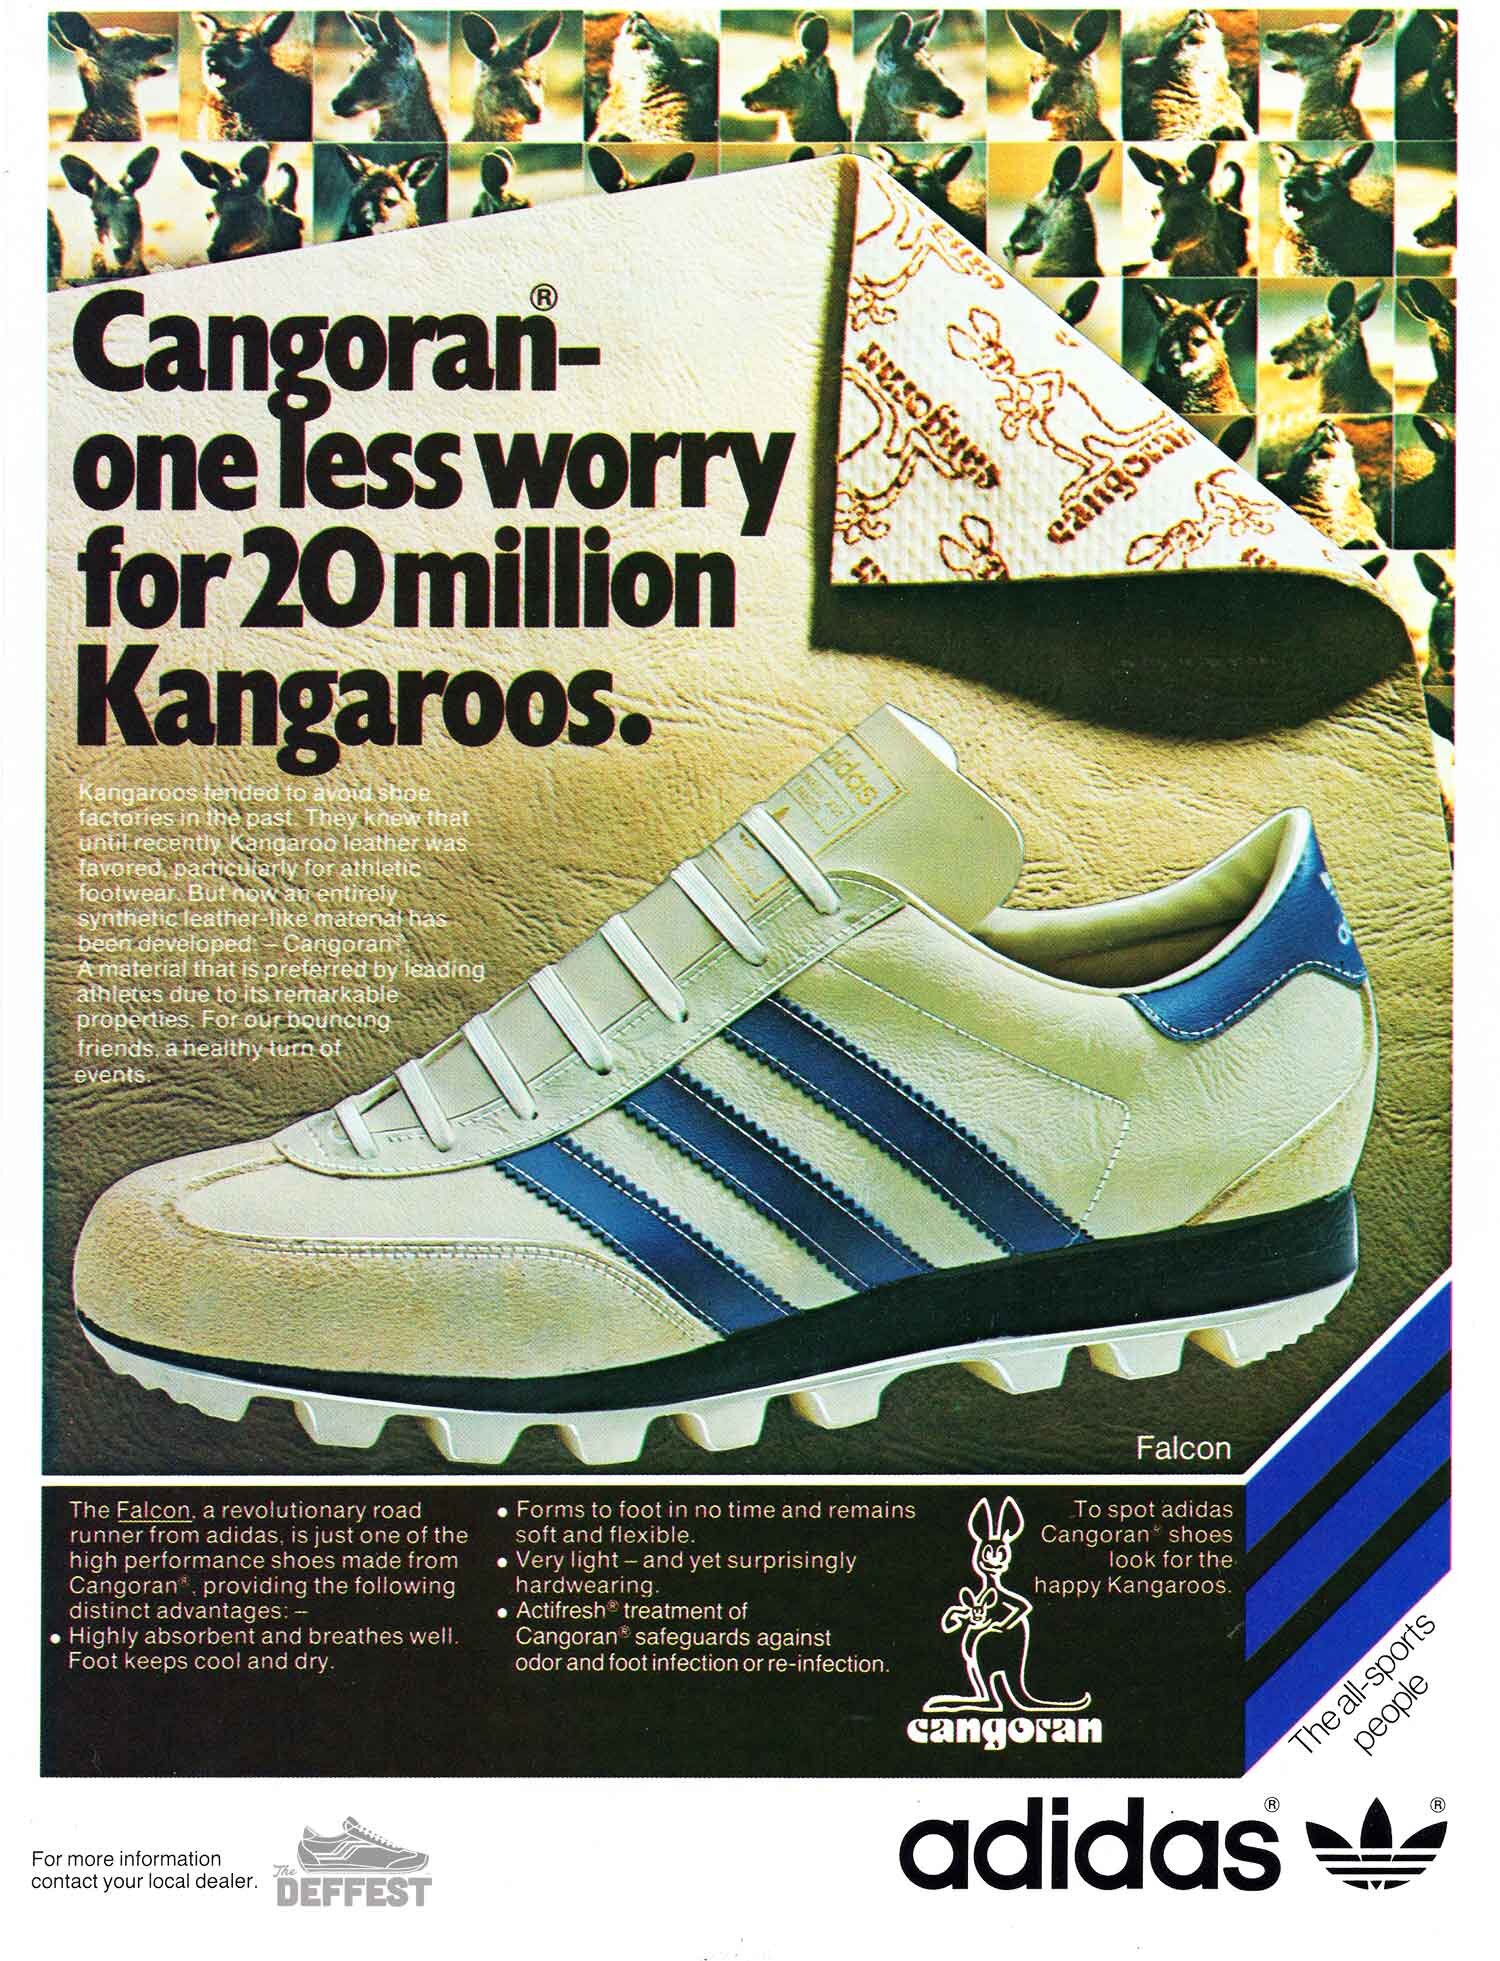 Kangaroos The Deffest®. A vintage and retro sneaker blog. Vintage